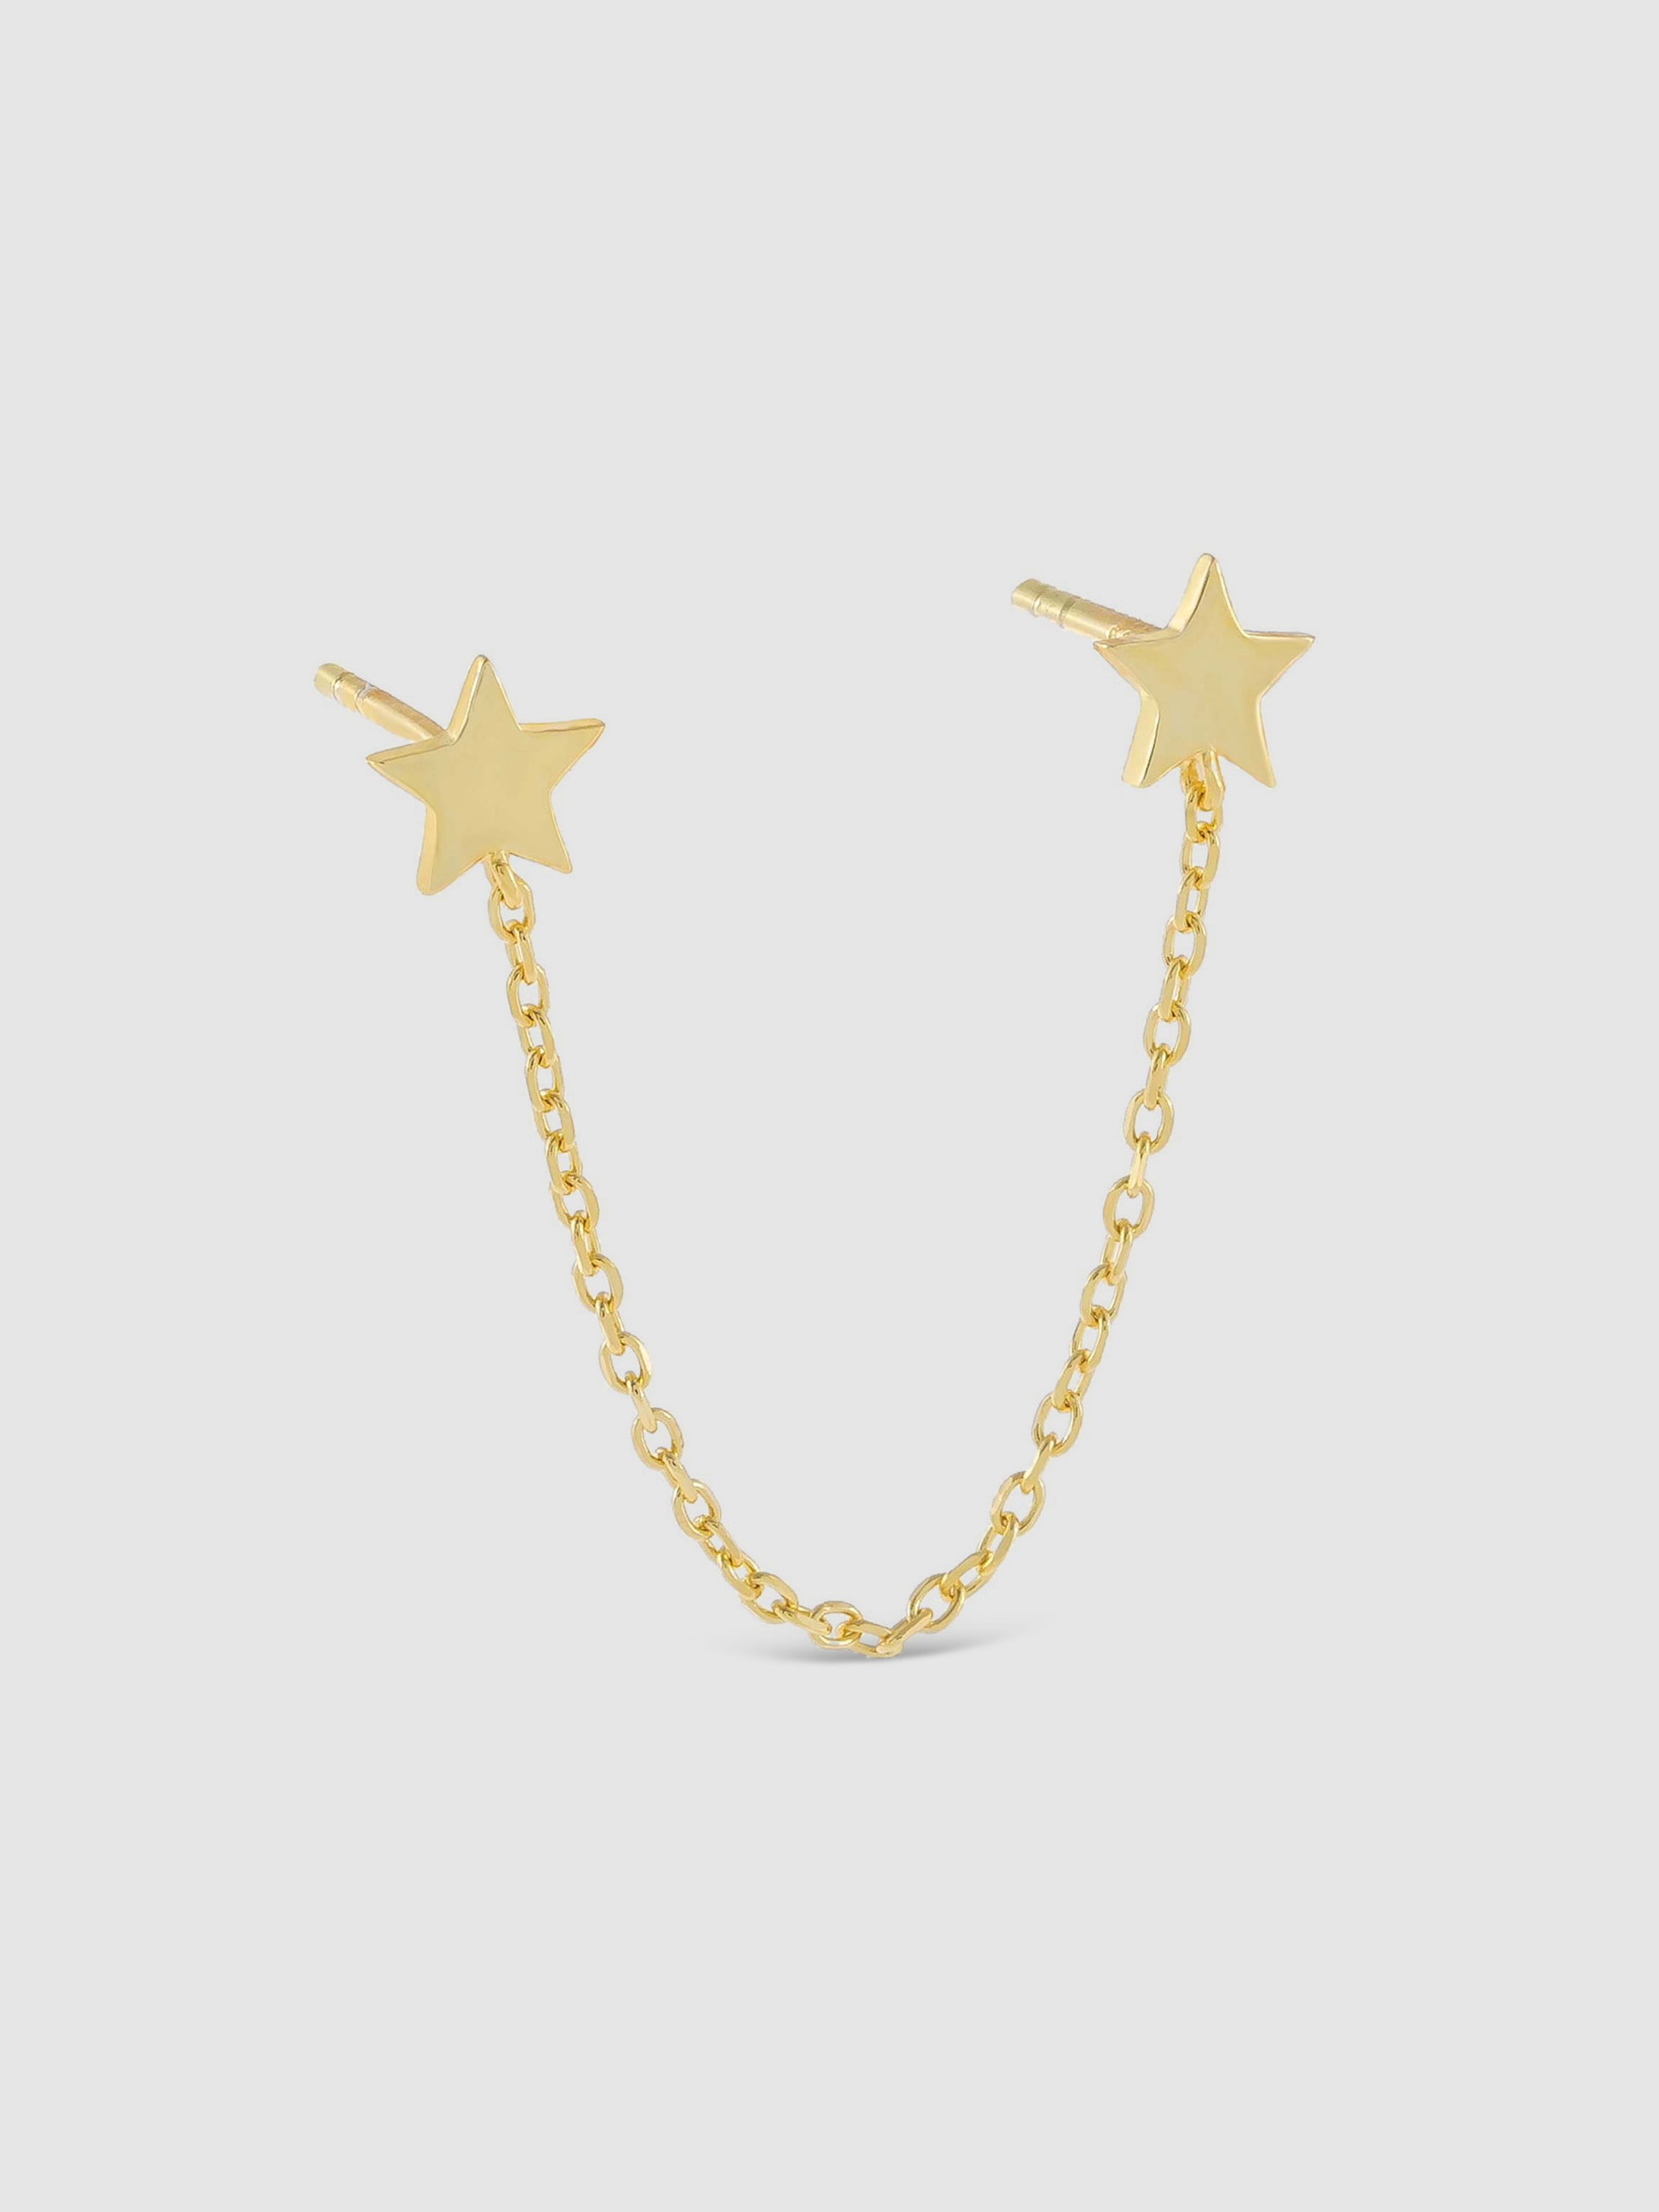 Adinas Jewels Adina's Jewels Double Star Chain Stud Earring In Gold